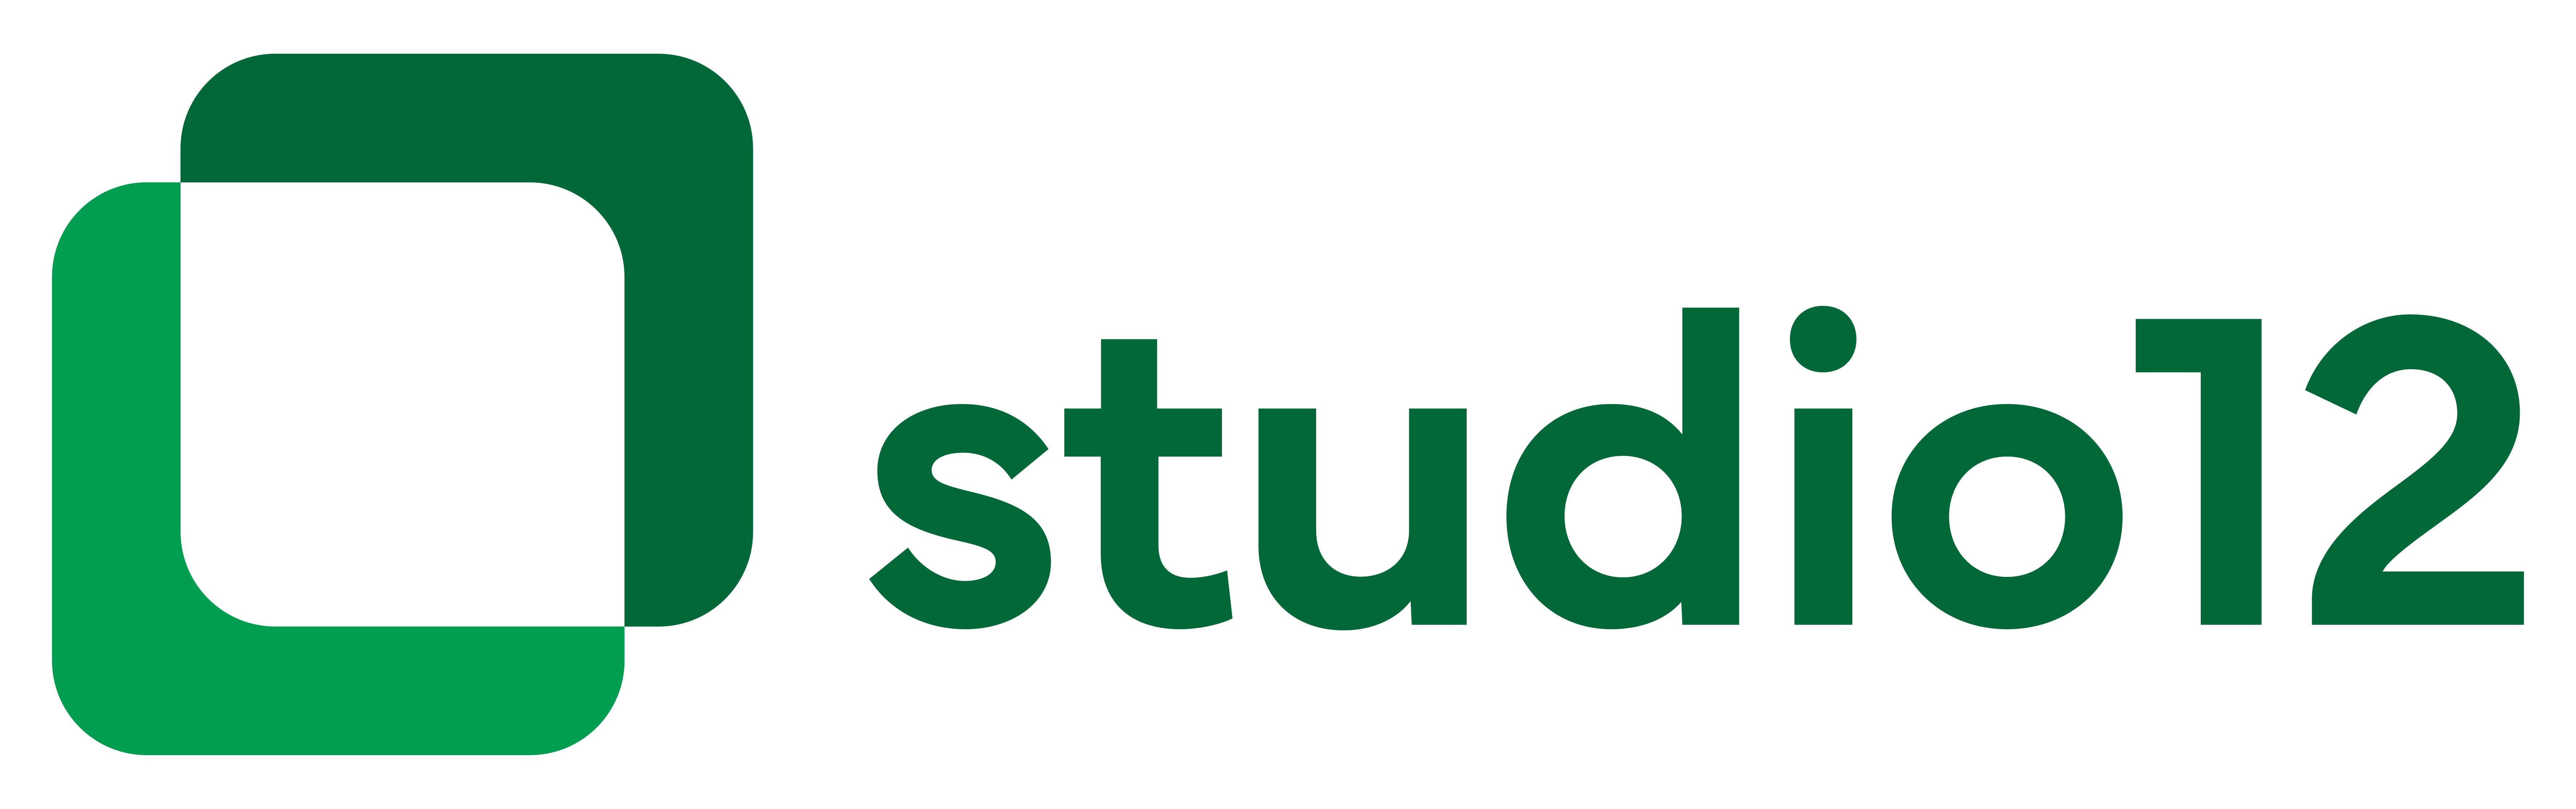 Logo studio12 gmbh